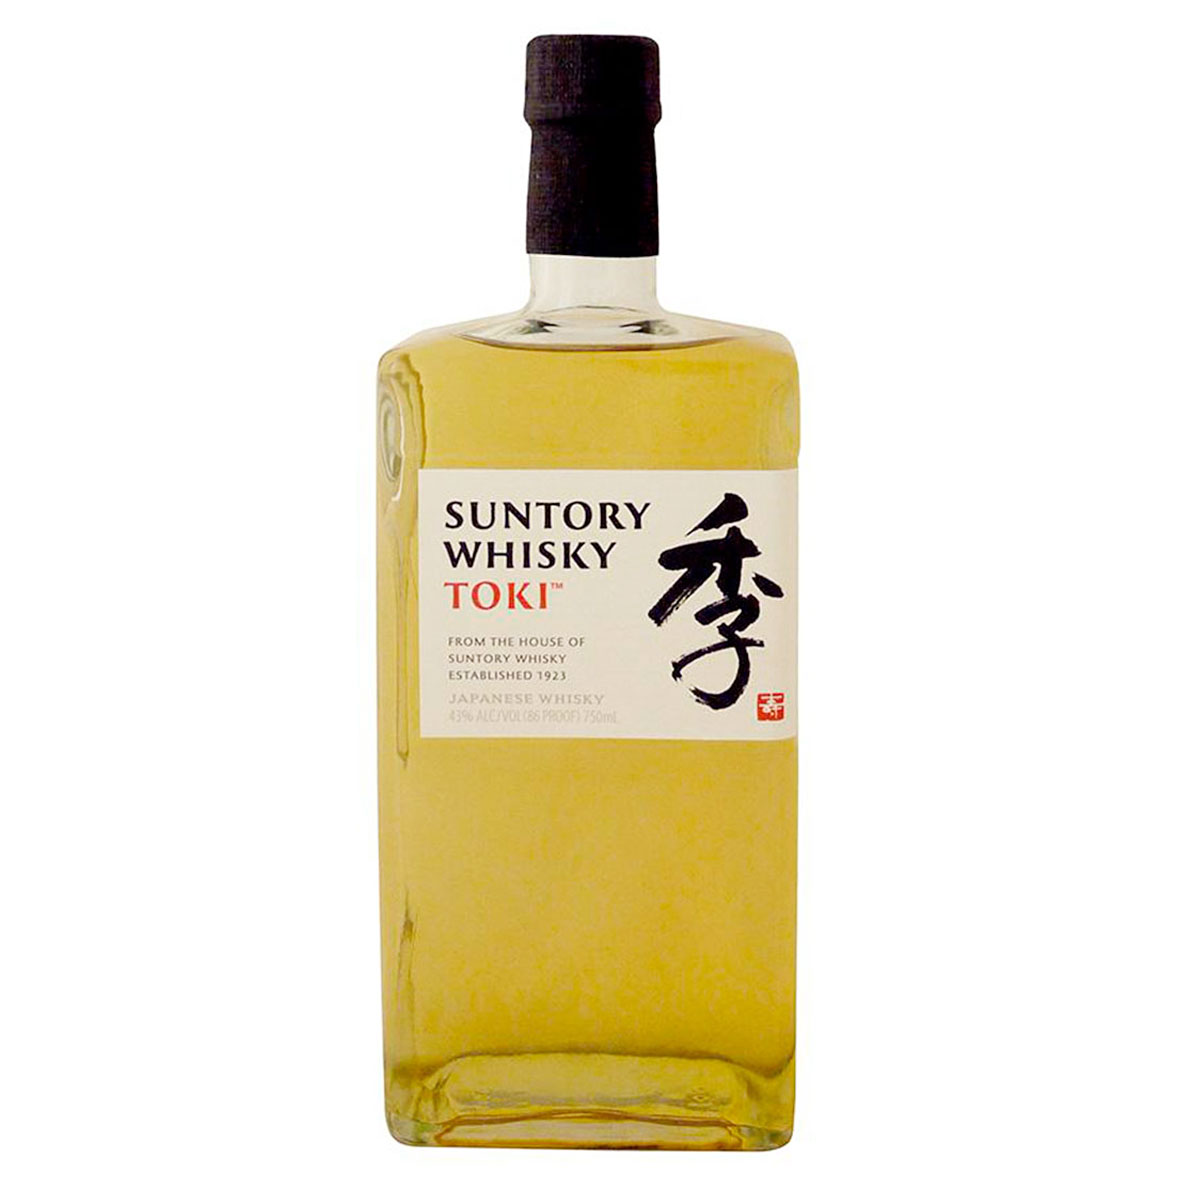 a bottle of toki suntory japanese whisky